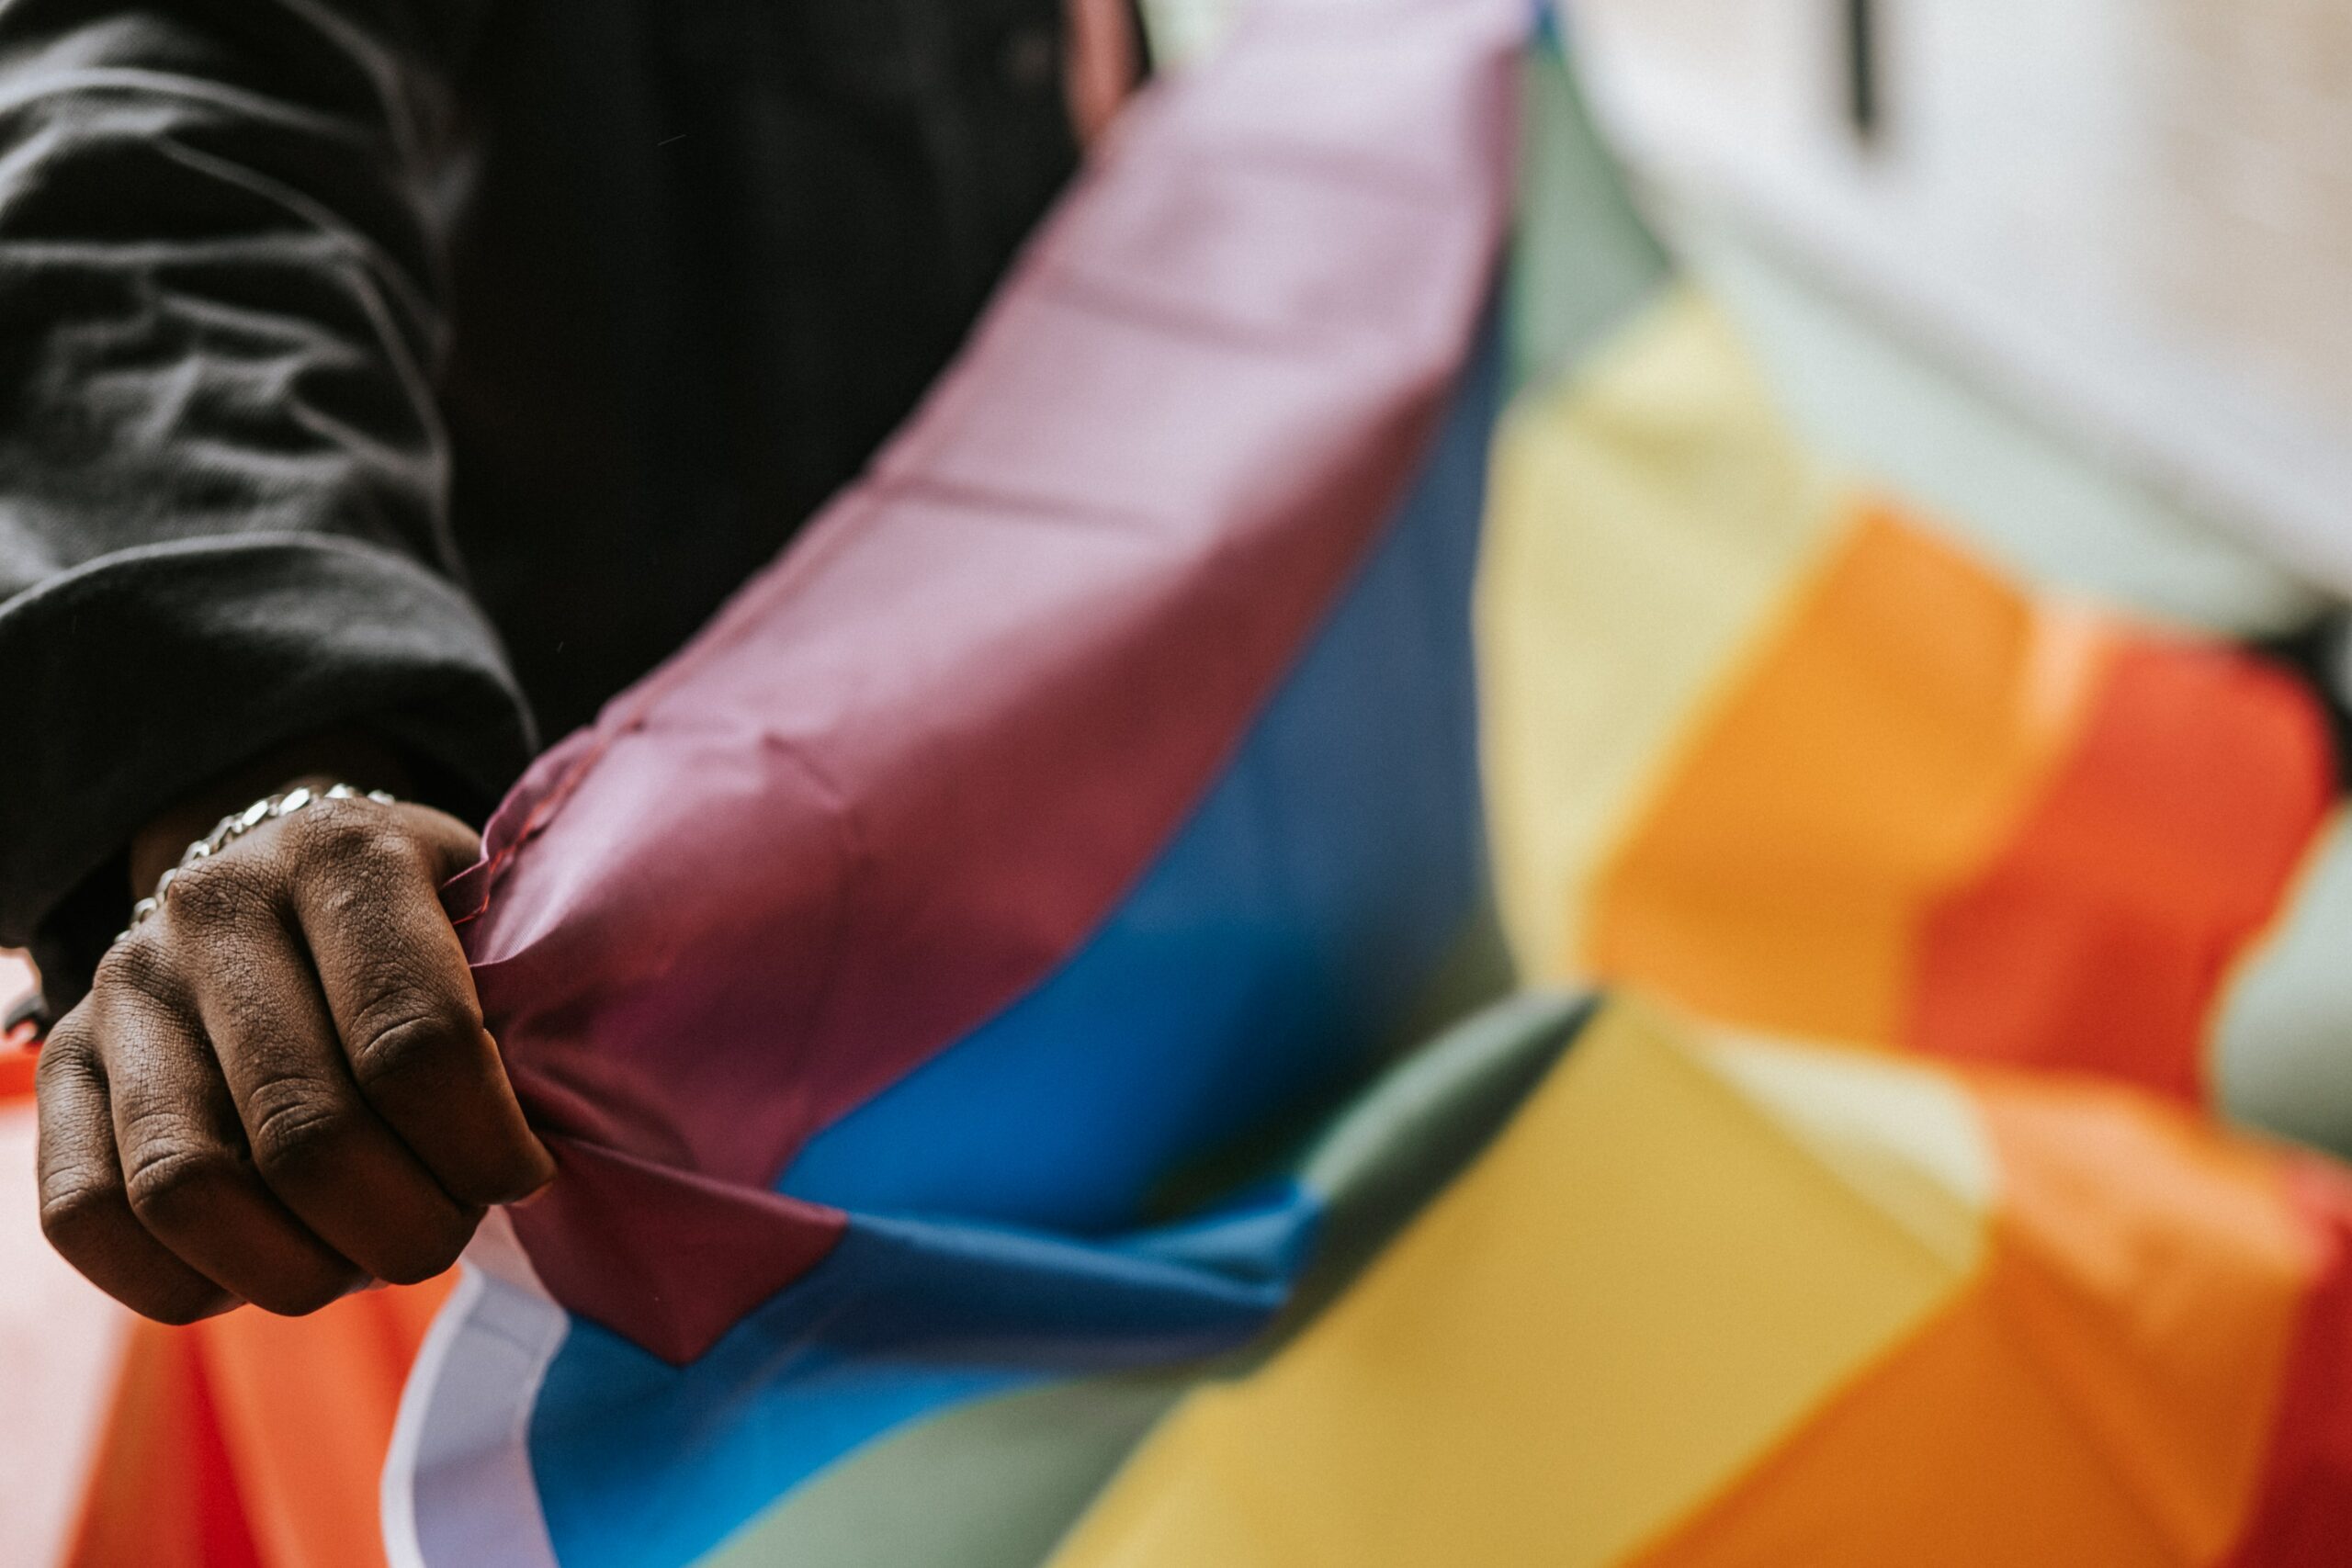 Regenbogenflagge (Pride Flag) wird gehisst